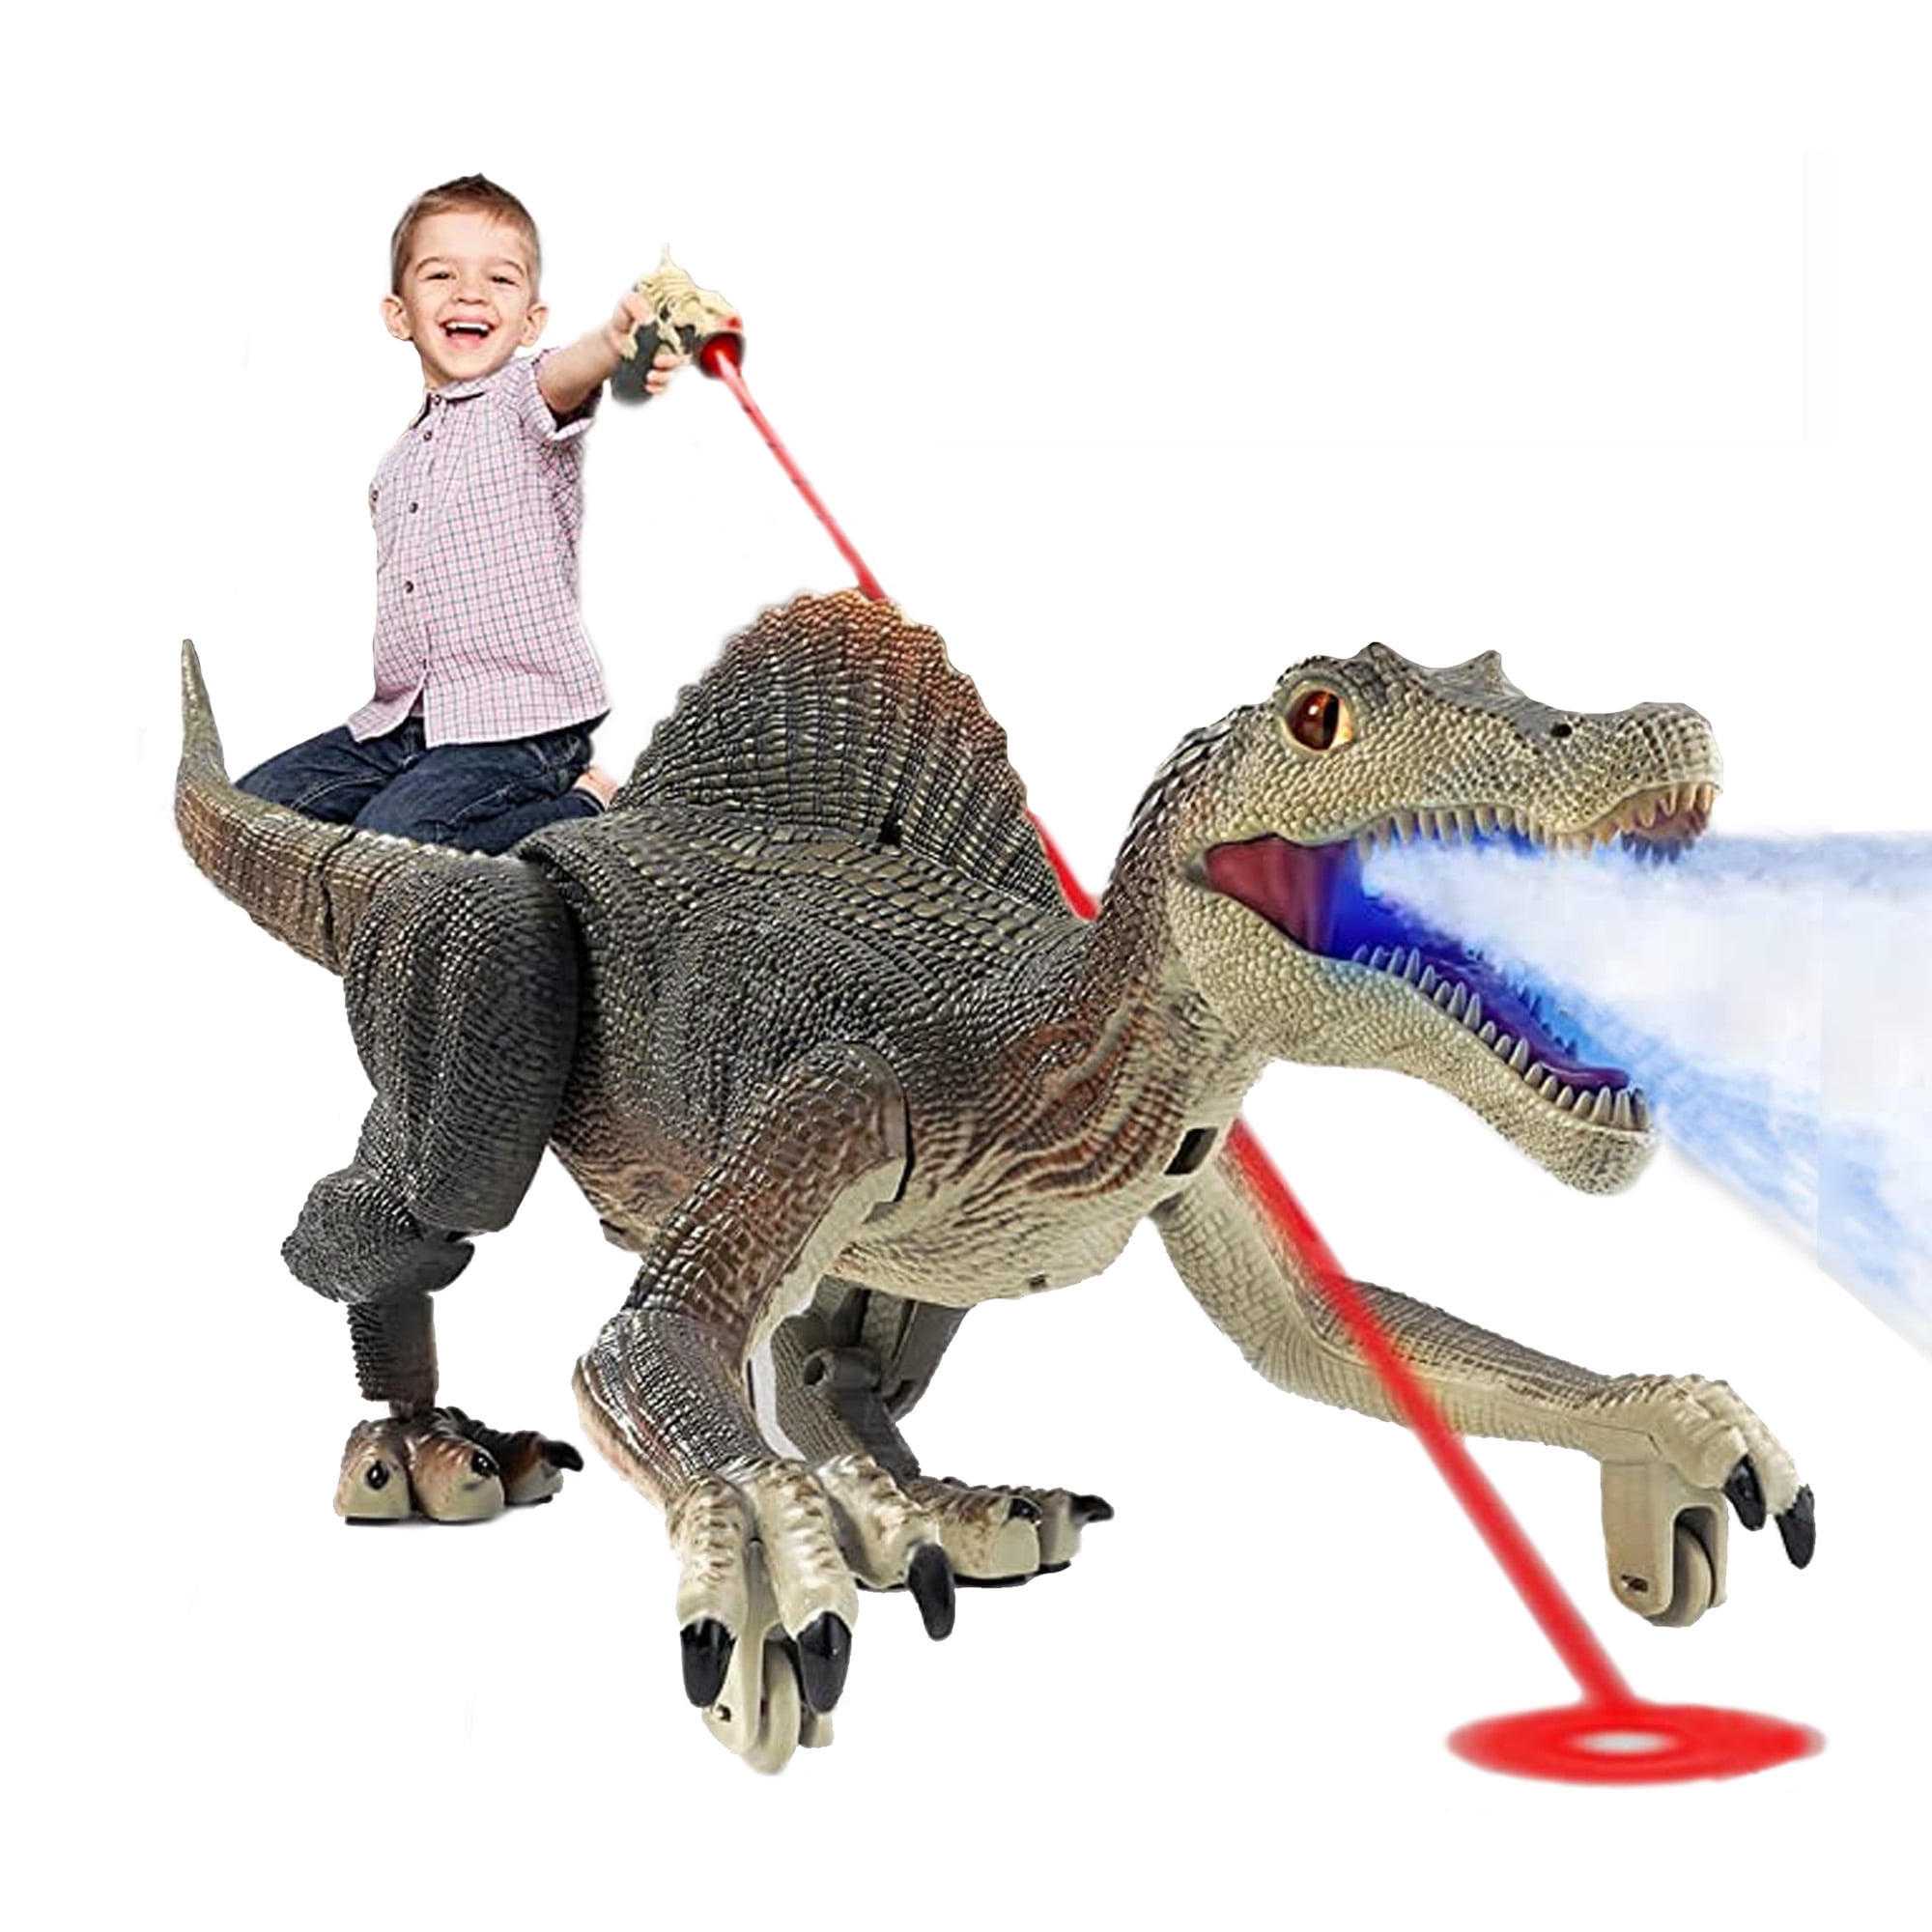 Richgv Remote Control Dinosaur Toys For